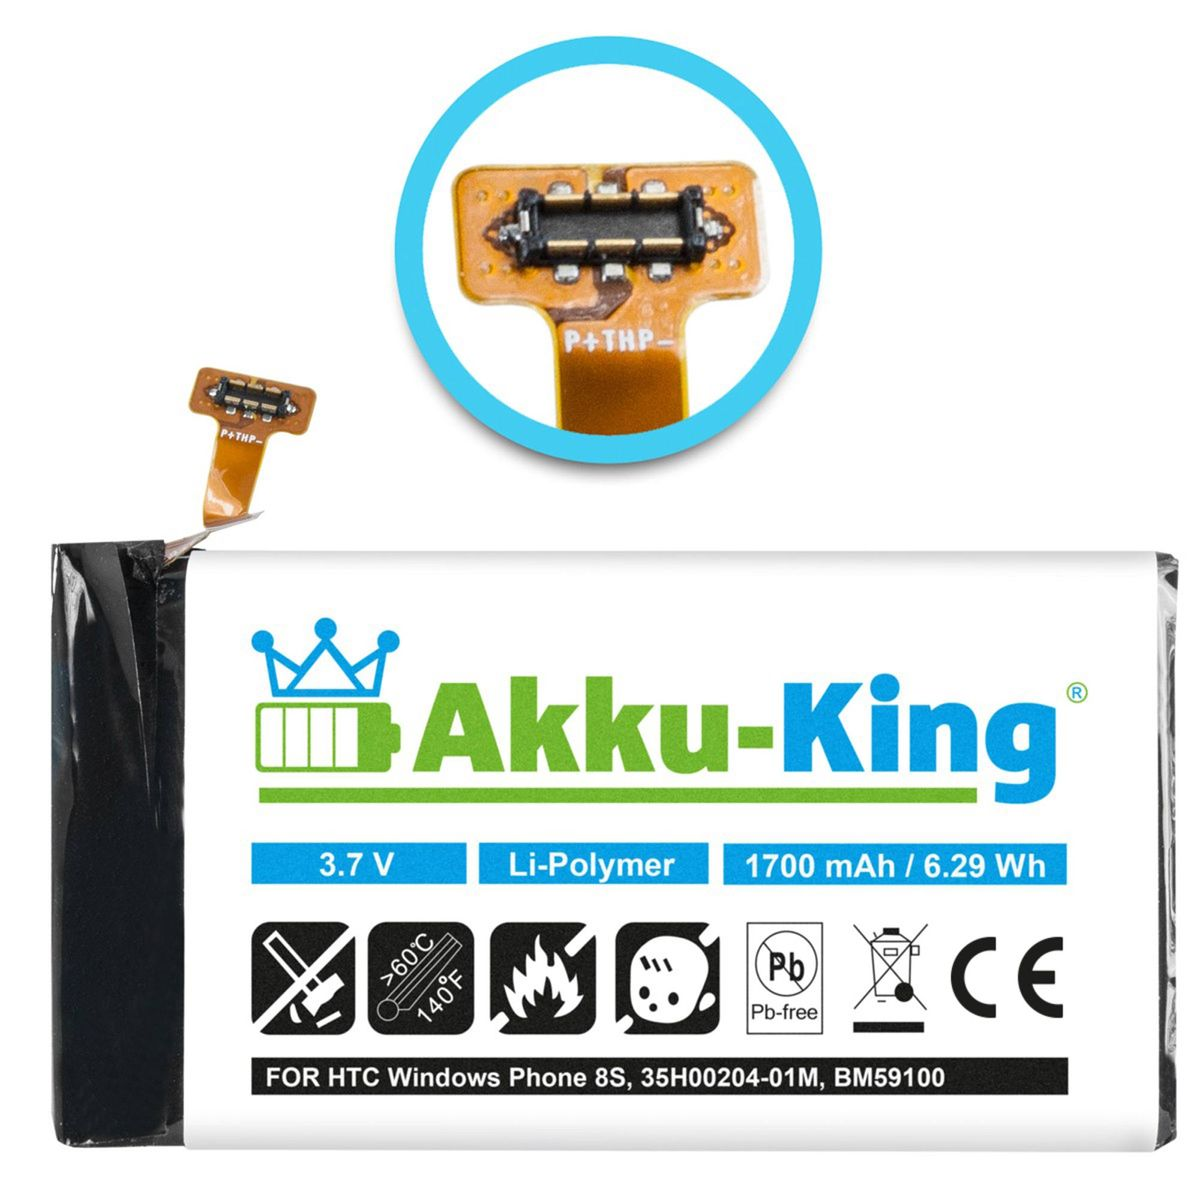 1700mAh kompatibel Handy-Akku, mit HTC Li-Polymer 35H00204-01M 3.7 AKKU-KING Akku Volt,